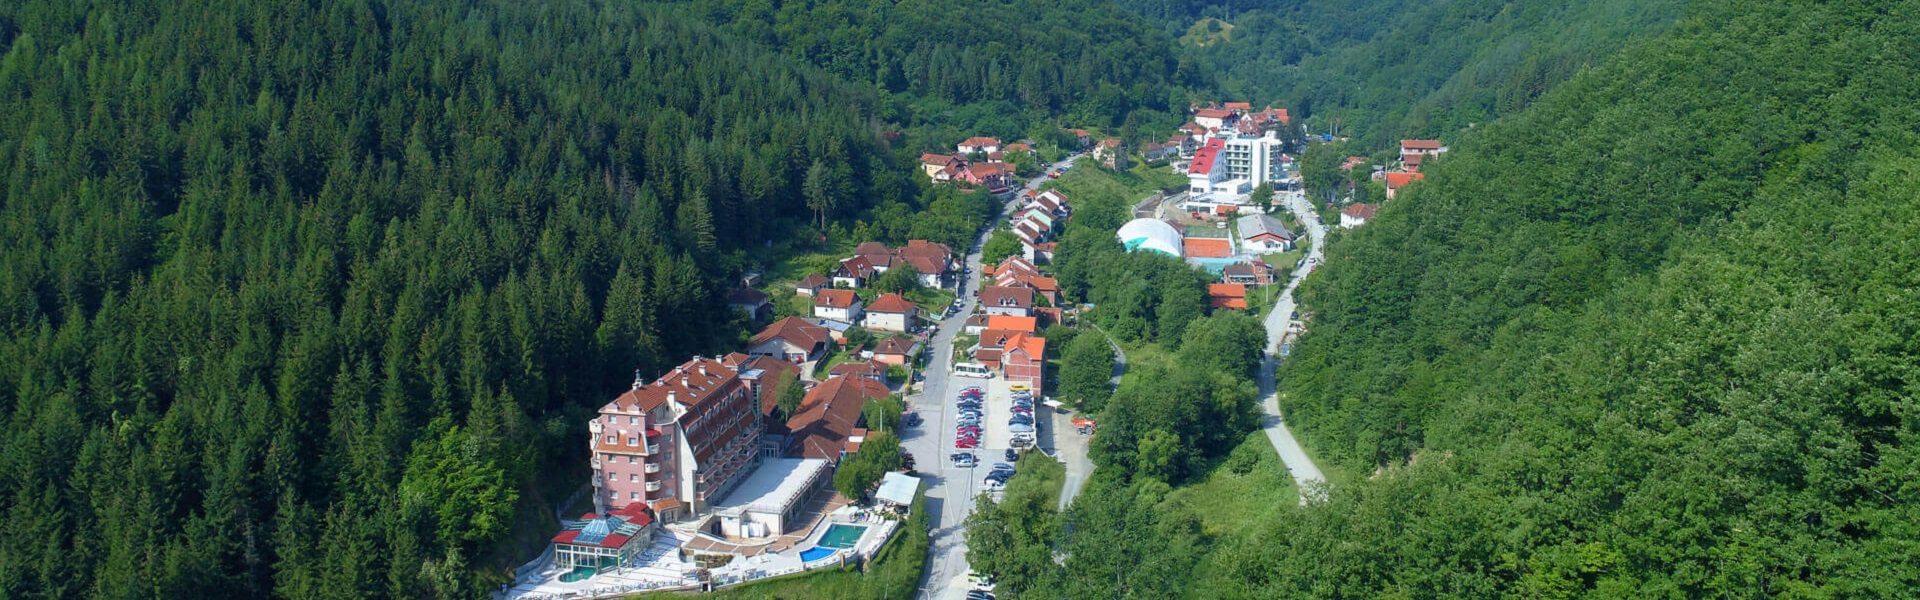 Rent a car Banja Luka |  Lukovska banja u Srbiji